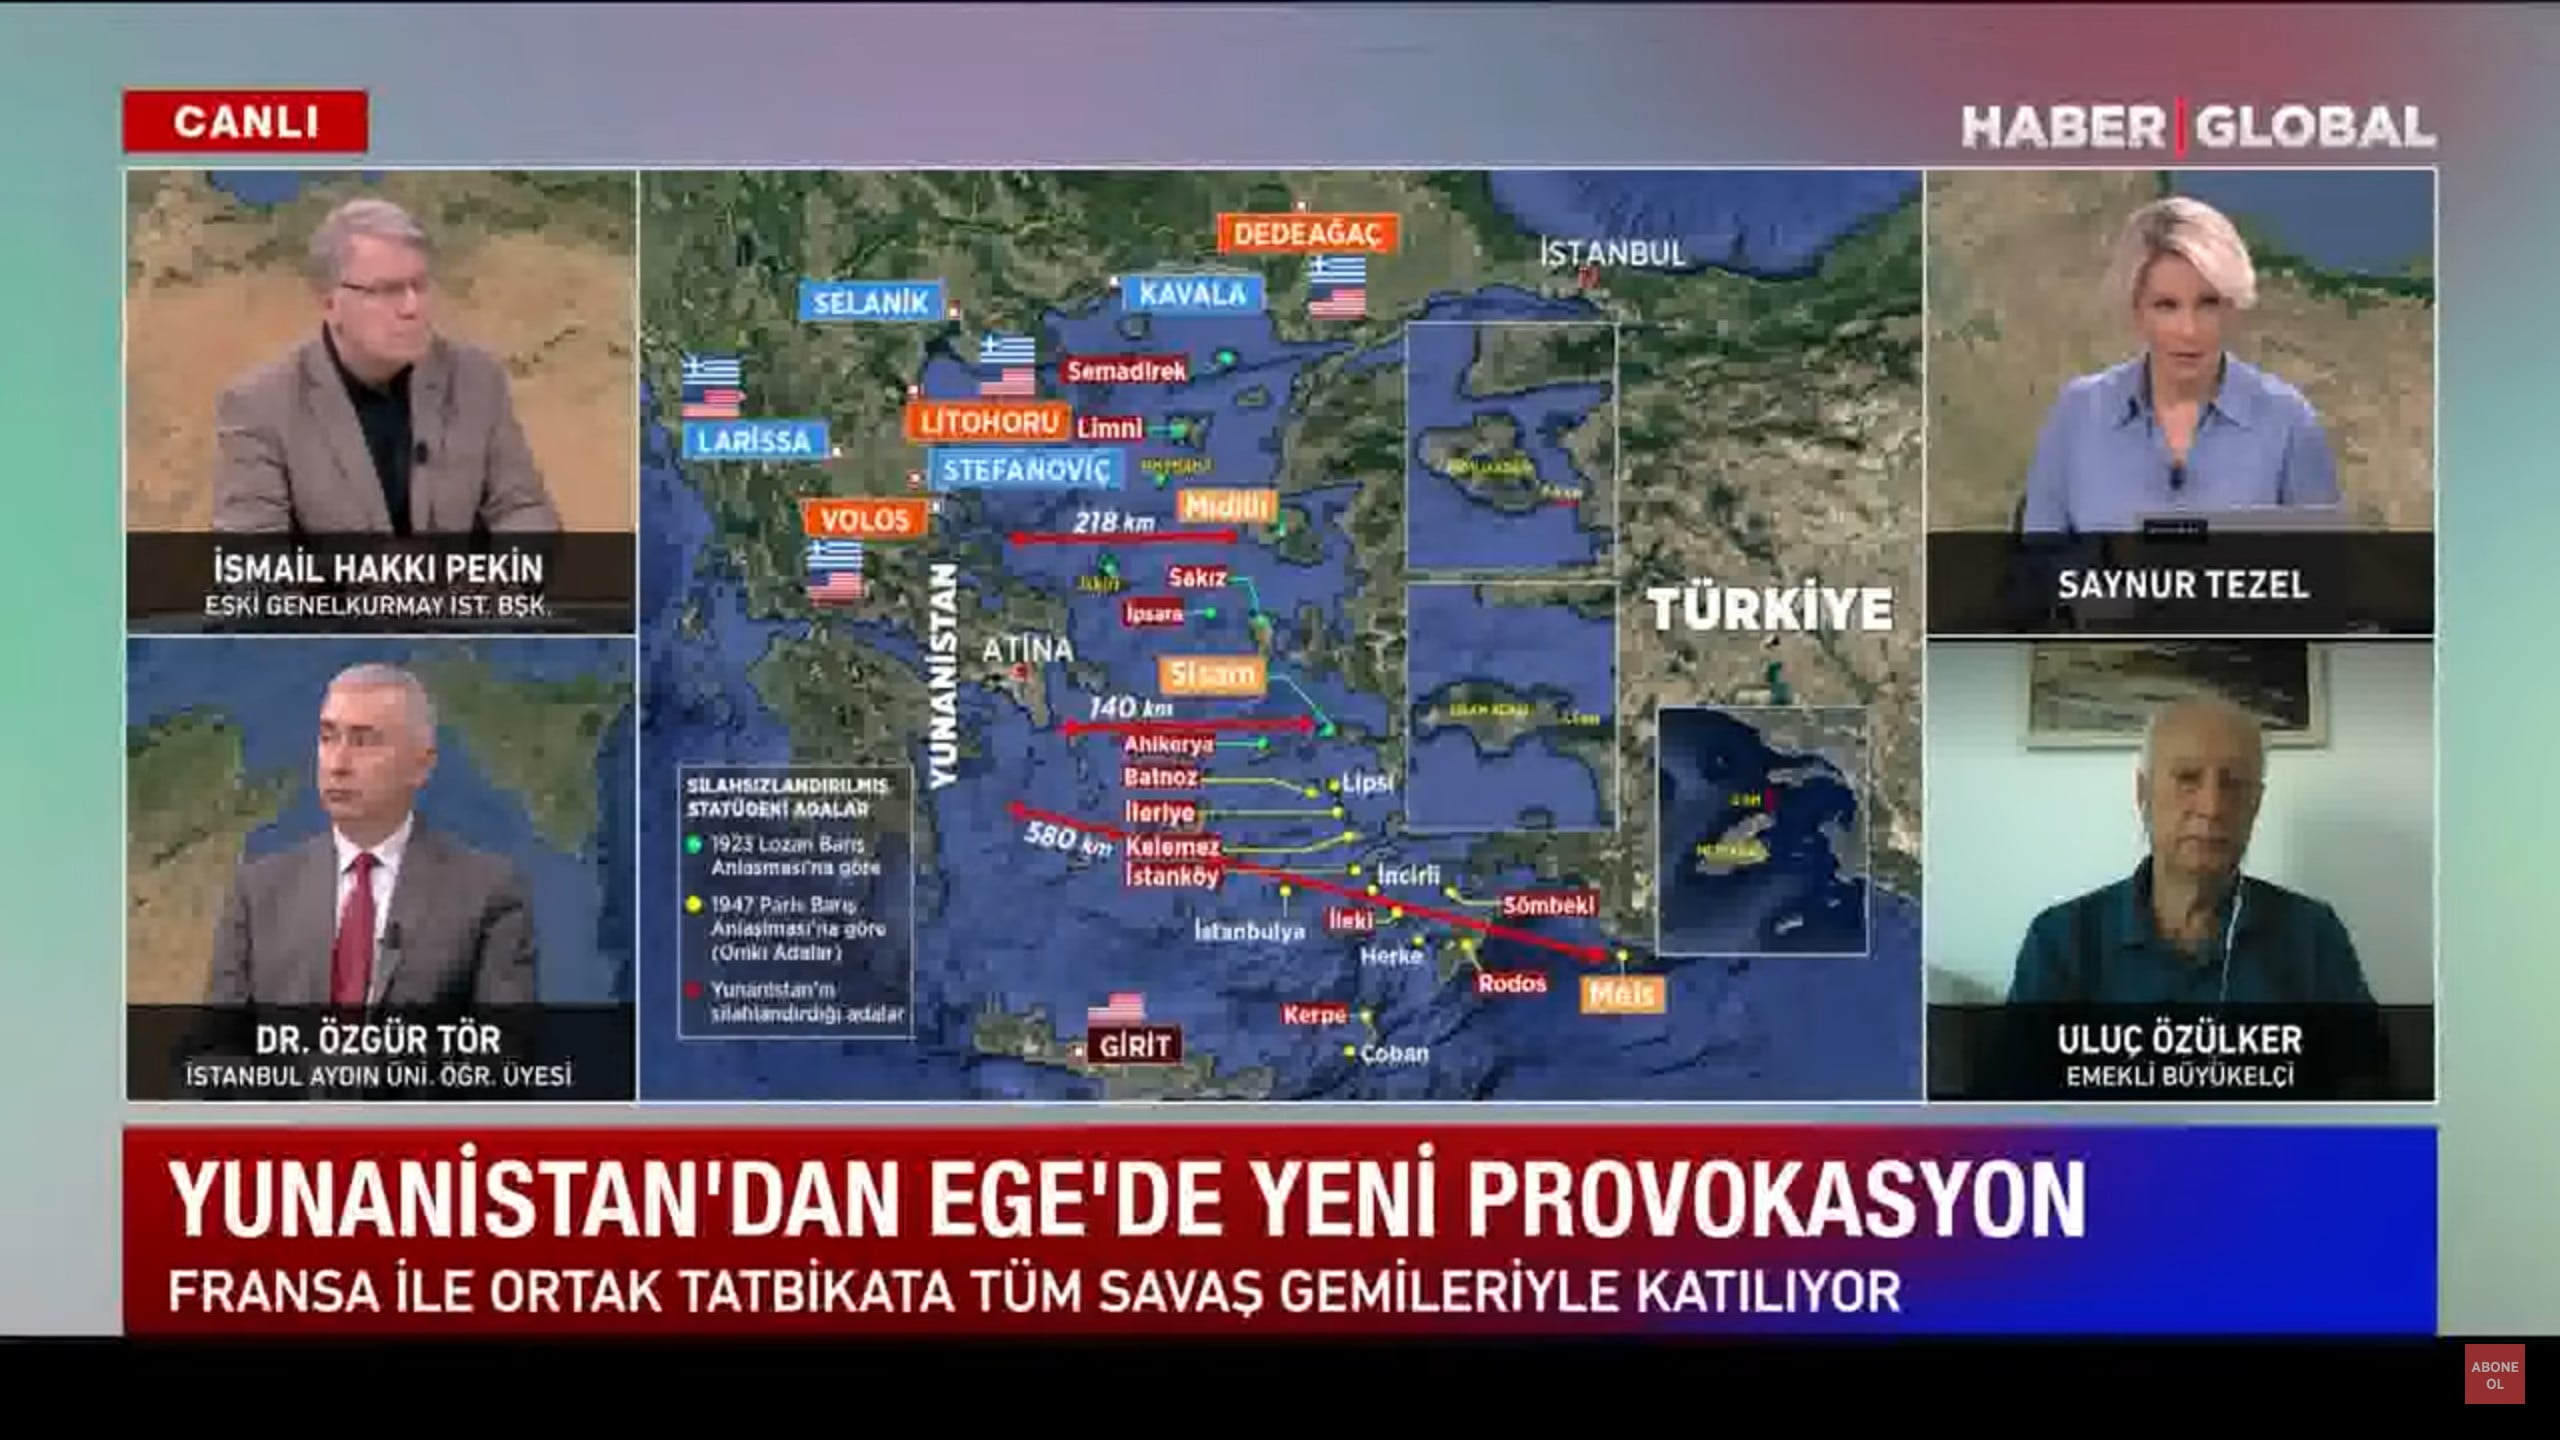 Aπειλές ξανά από την Τουρκία! Σε περίπτωση που συνεχιστεί η μεταφορά όπλων στα νησιά, θα αυξηθεί η ένταση – Τί λέει πρώην επικεφαλής υπηρεσιών πληροφοριών για την άμυνα της Ελλάδας (BINTEO)